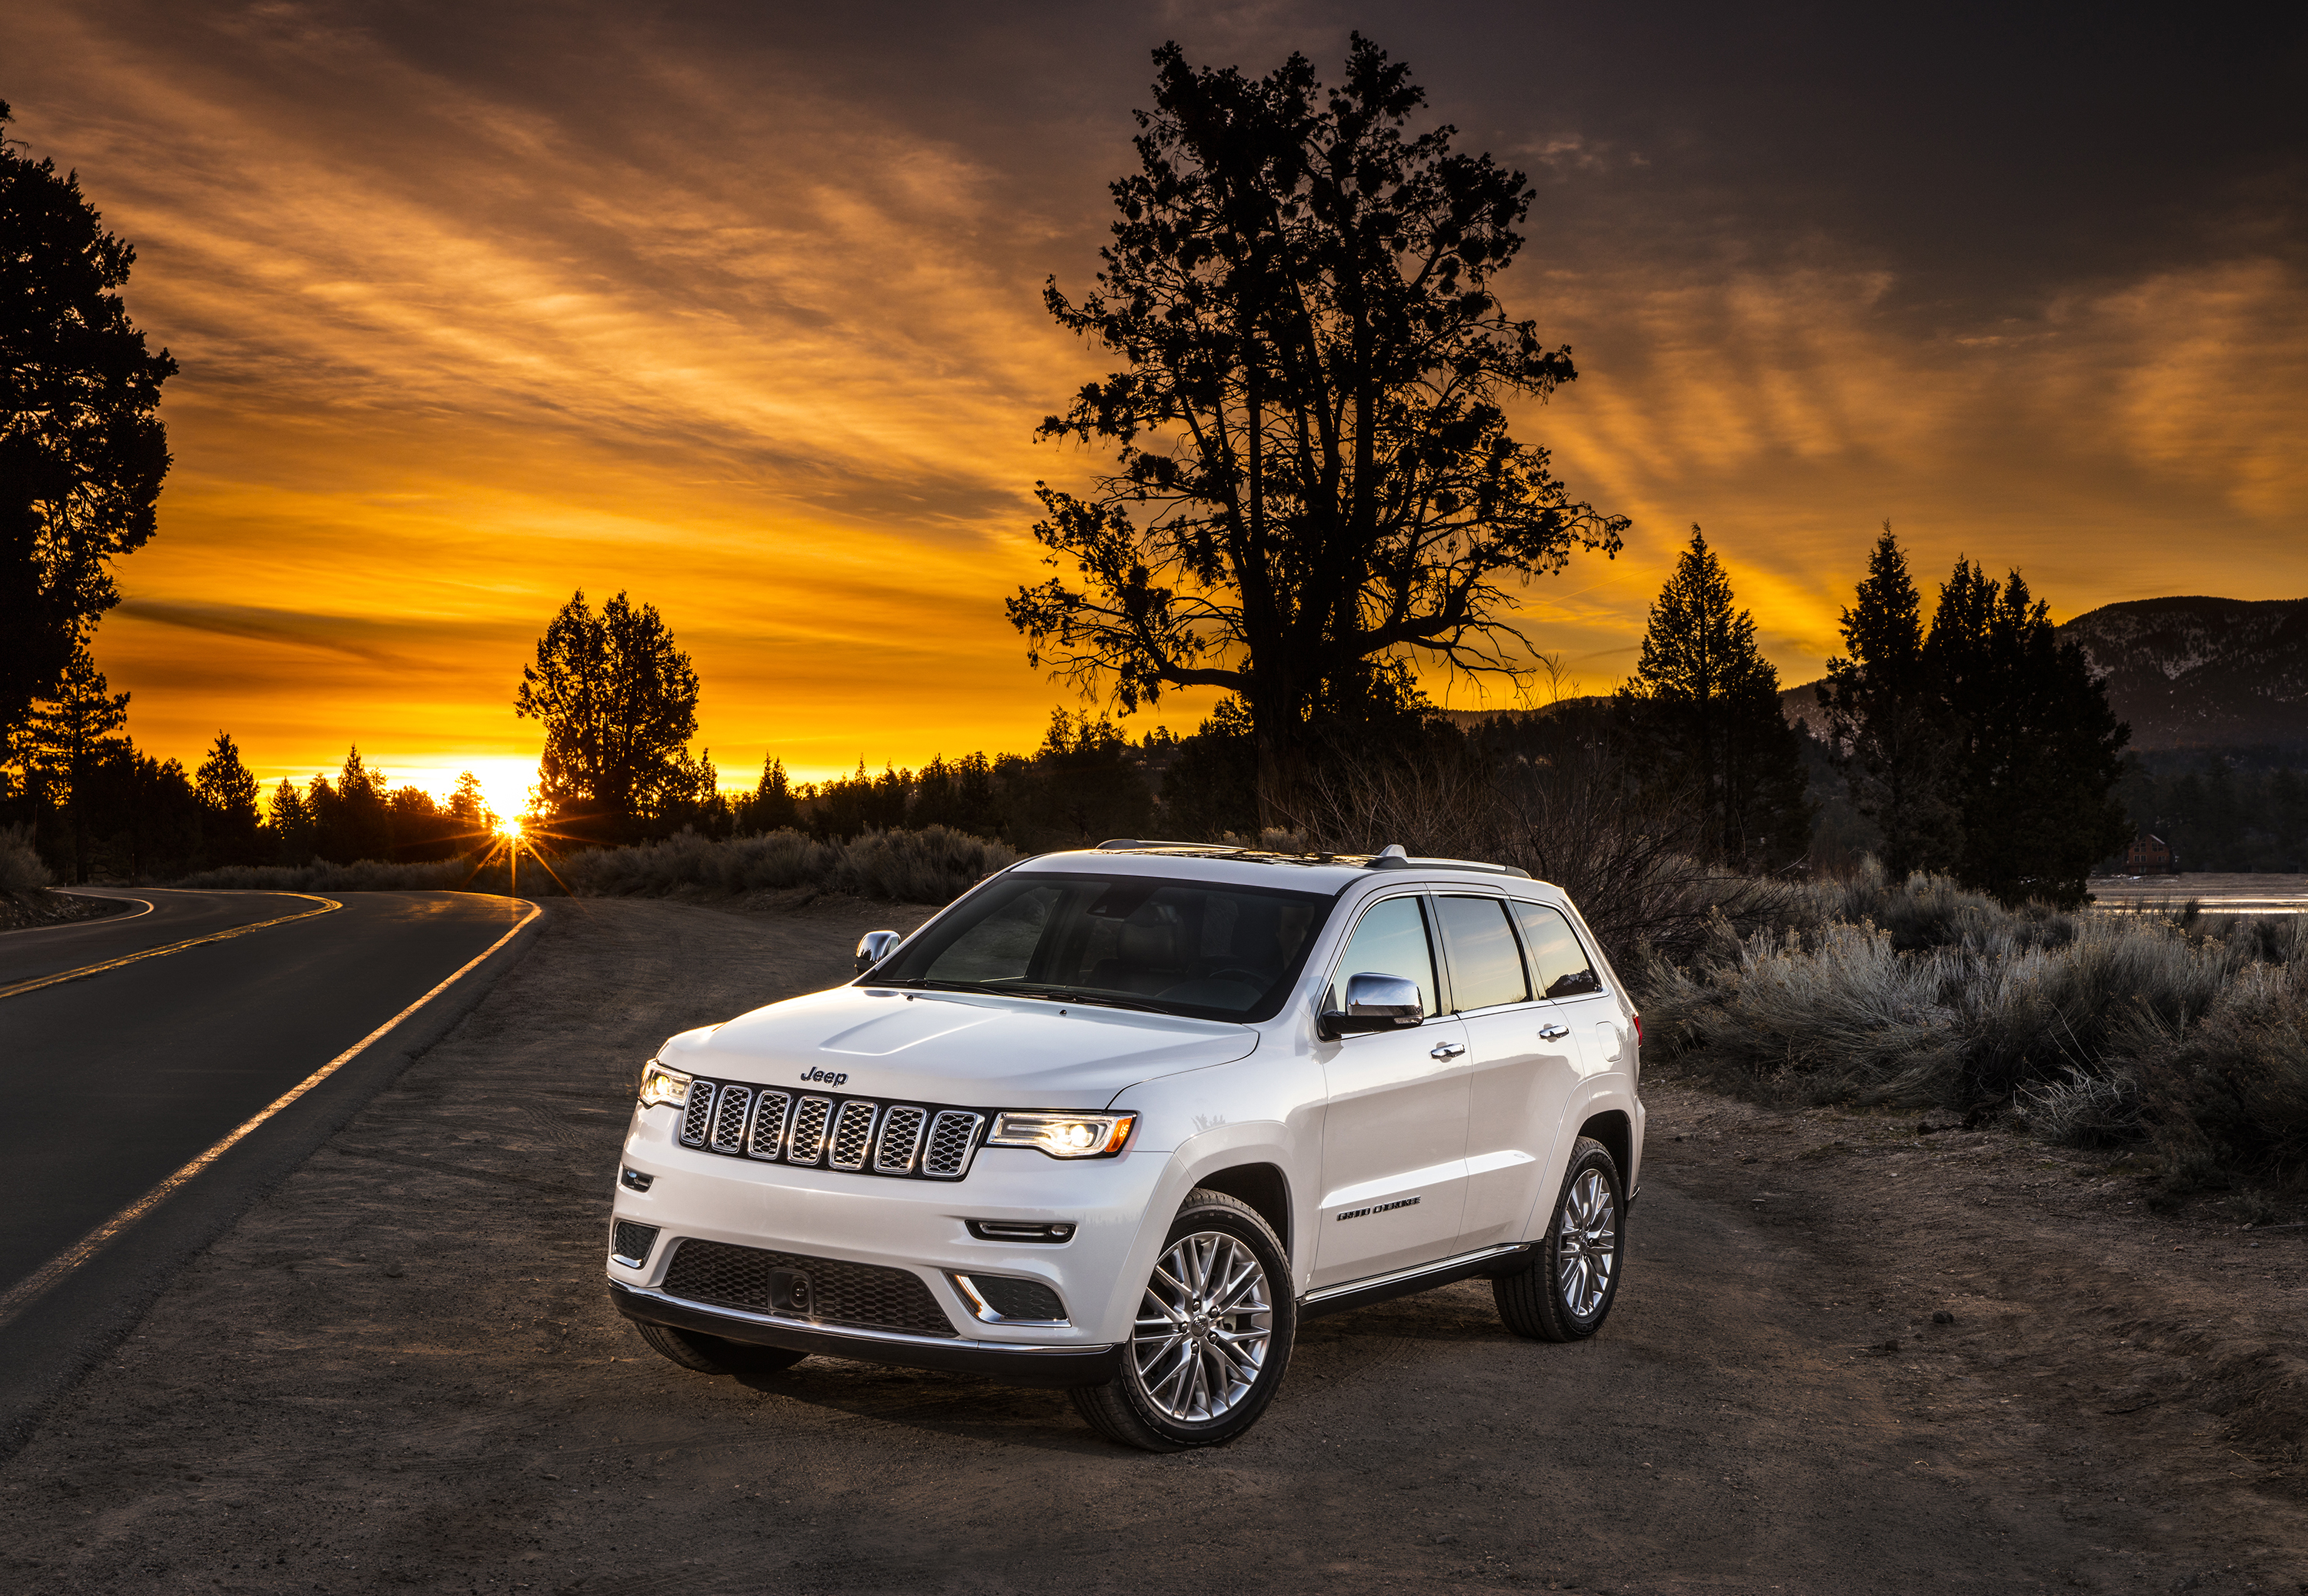 Jeep Grand Cherokee Jeep SUV Luxury Car White Car Car Vehicle Sunset Sunrise 3000x2075